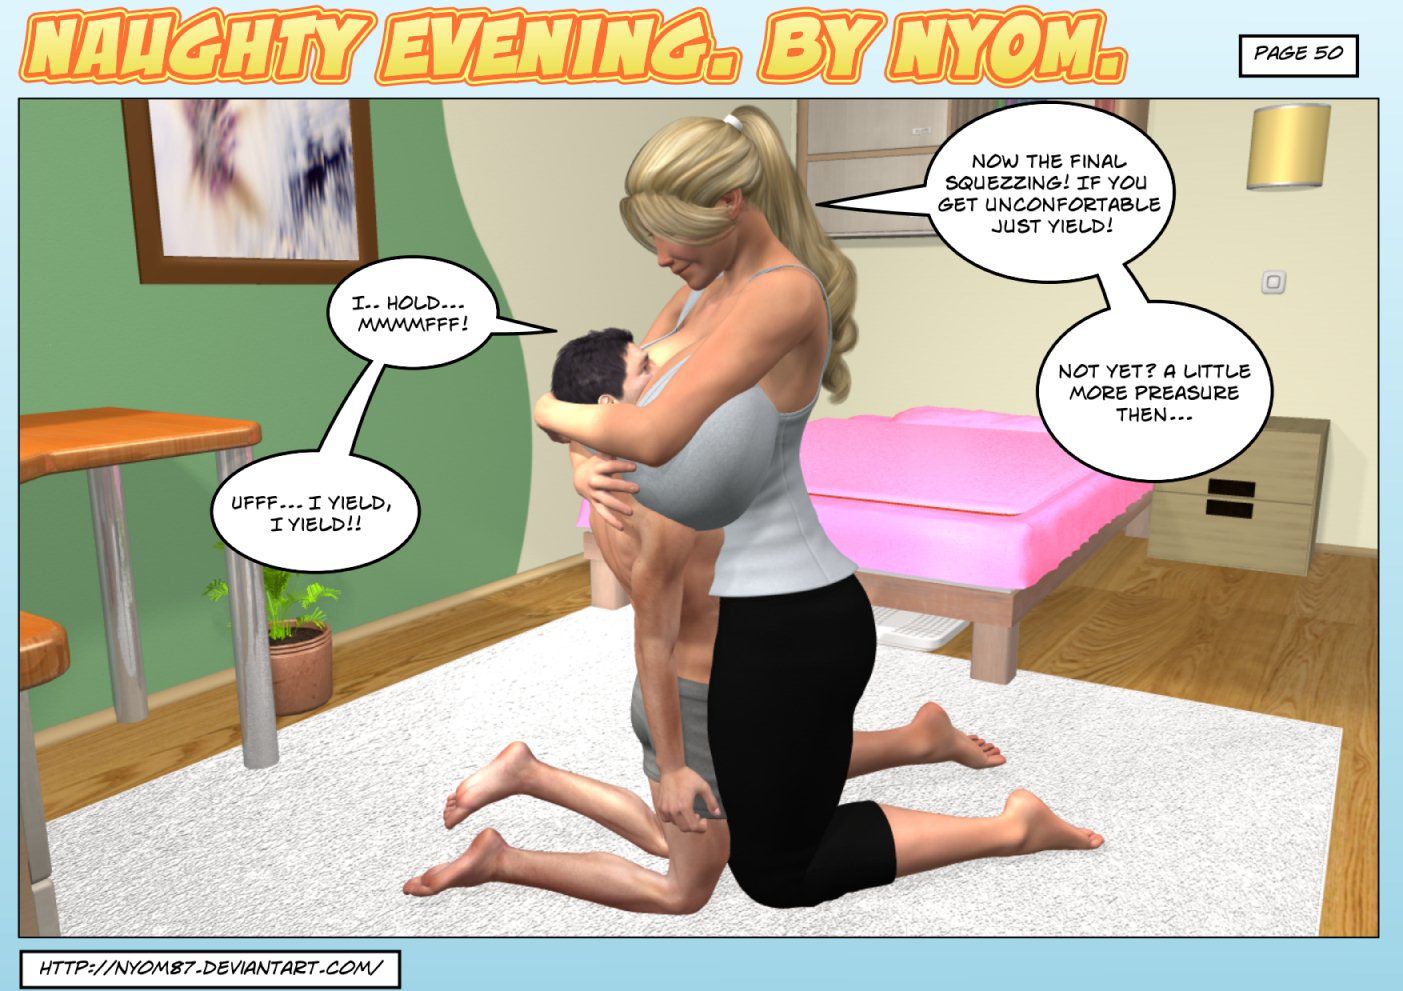 Nyom87 - Naughty evening,3D Big Boobs page 50